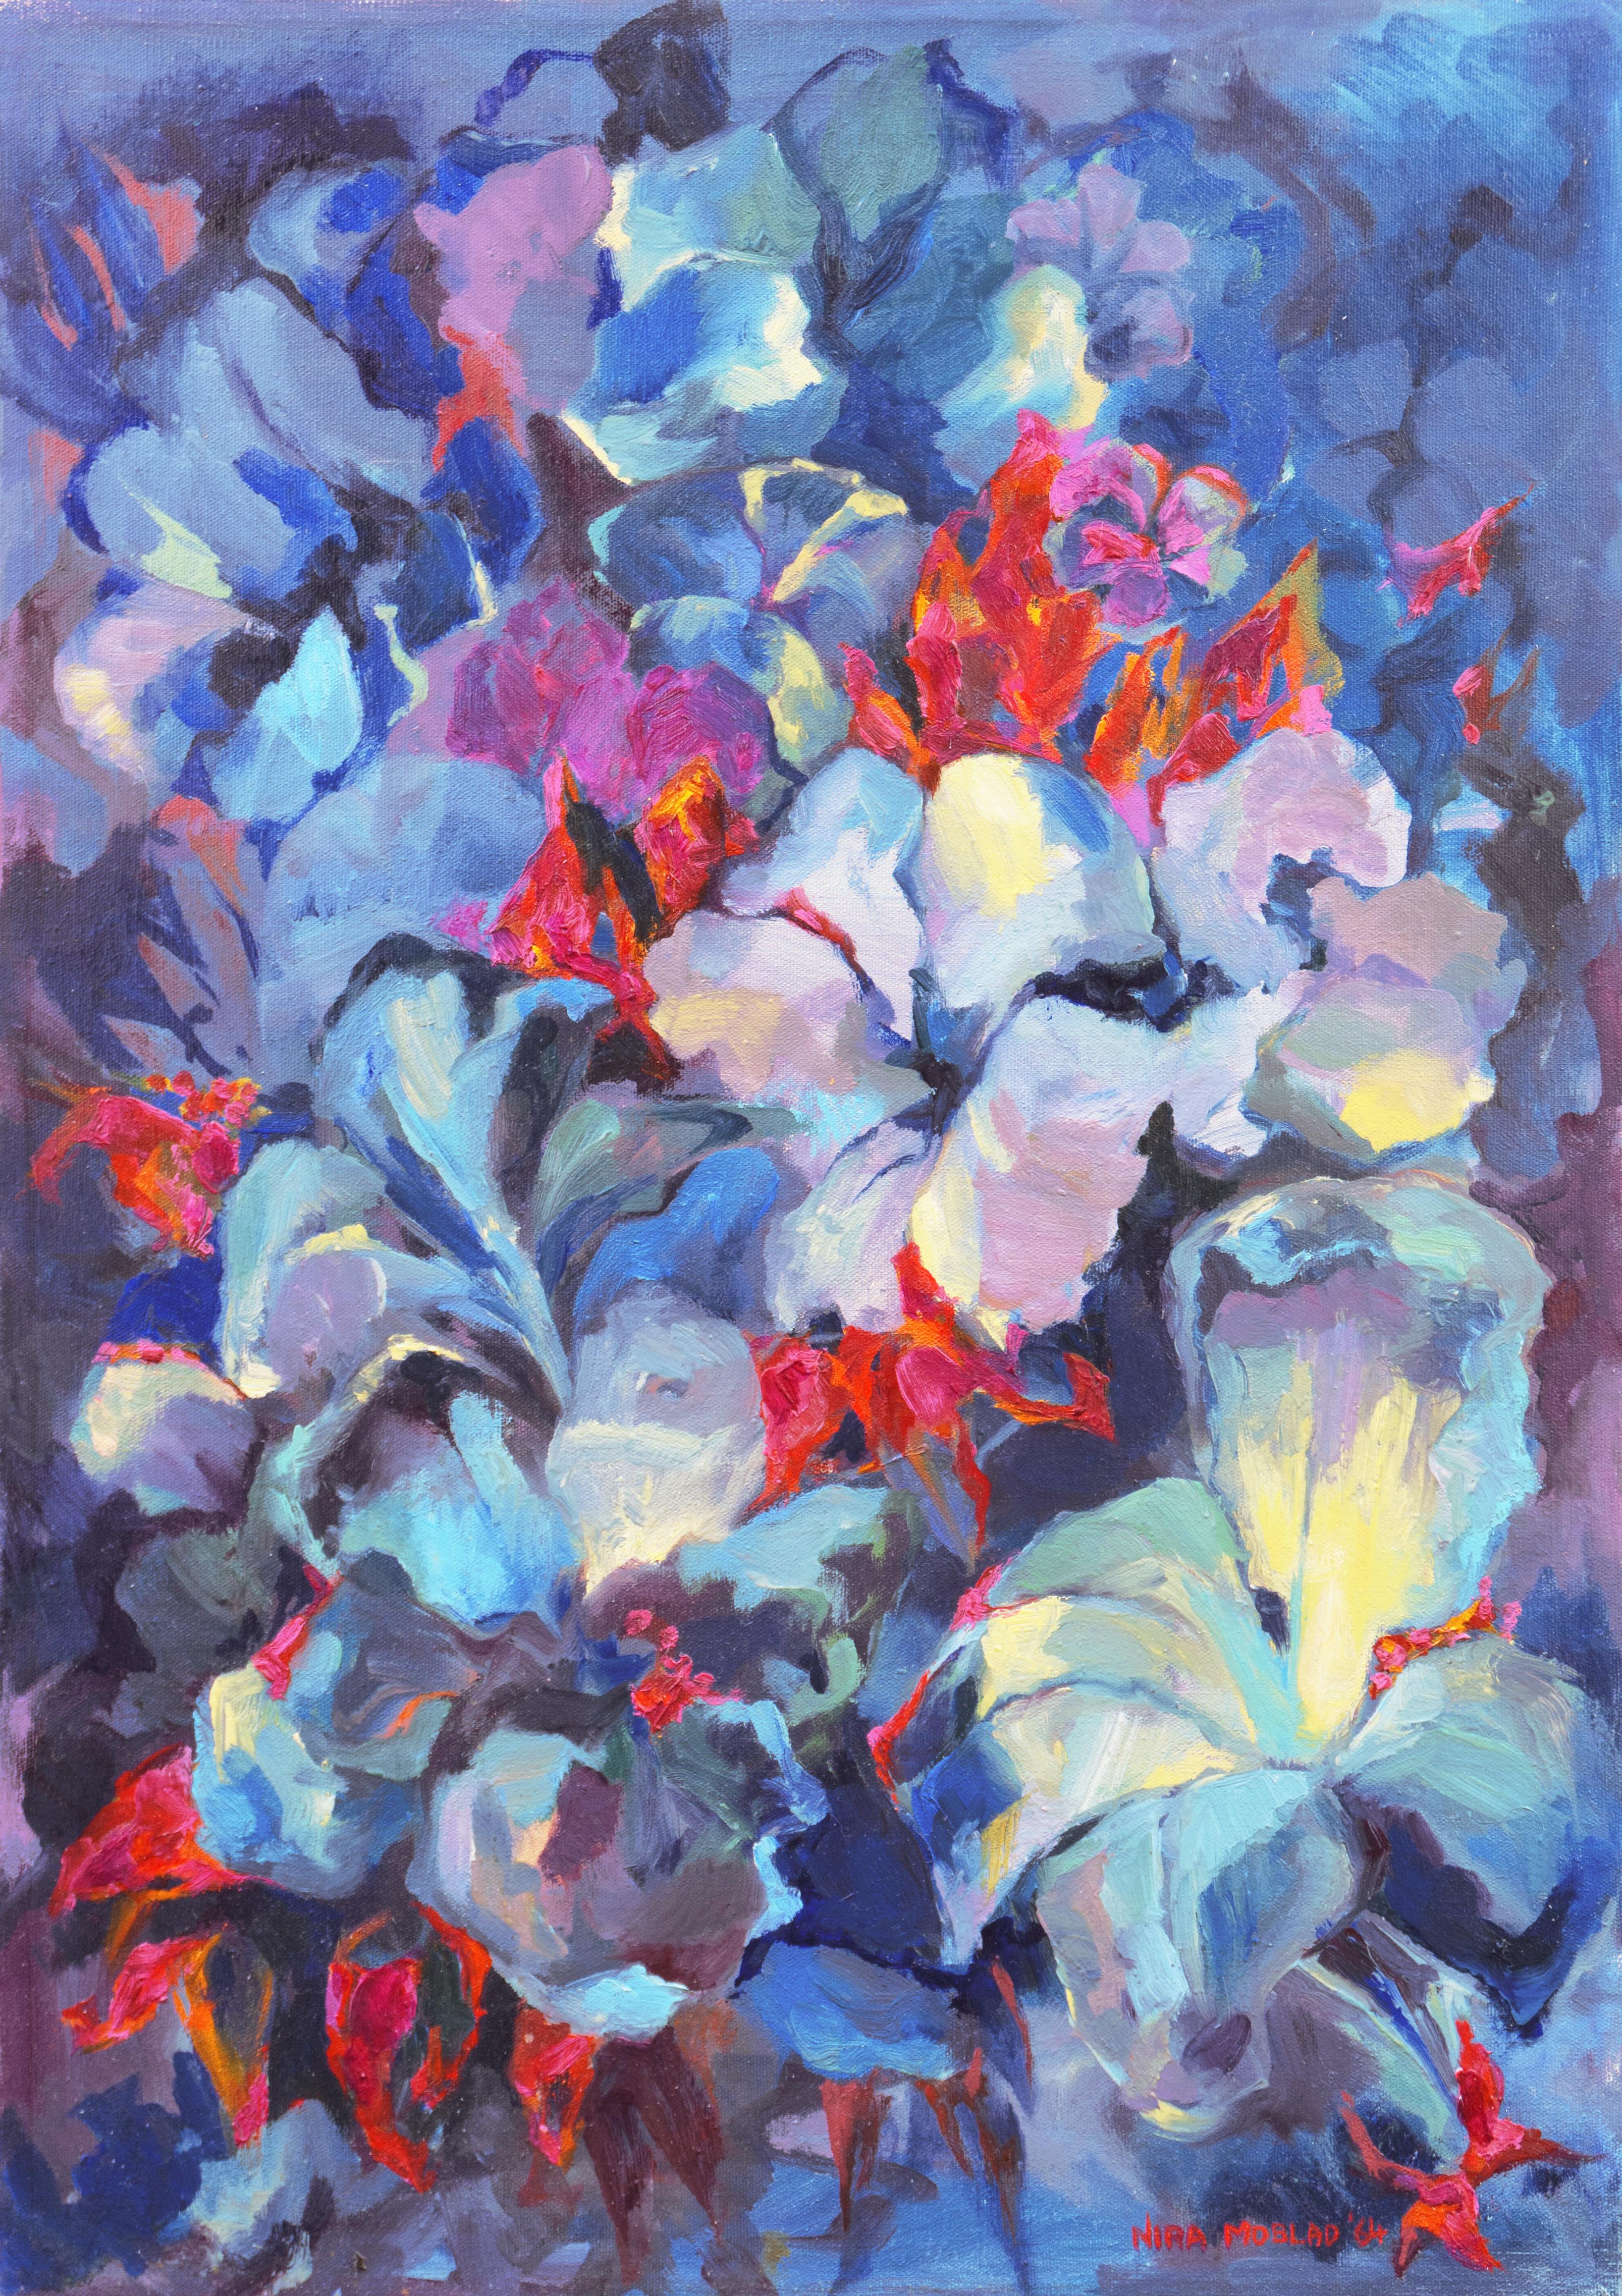 Abstract Painting Nira Moblad - Nature morte post-impressionniste florale abstraite, bleue et corail